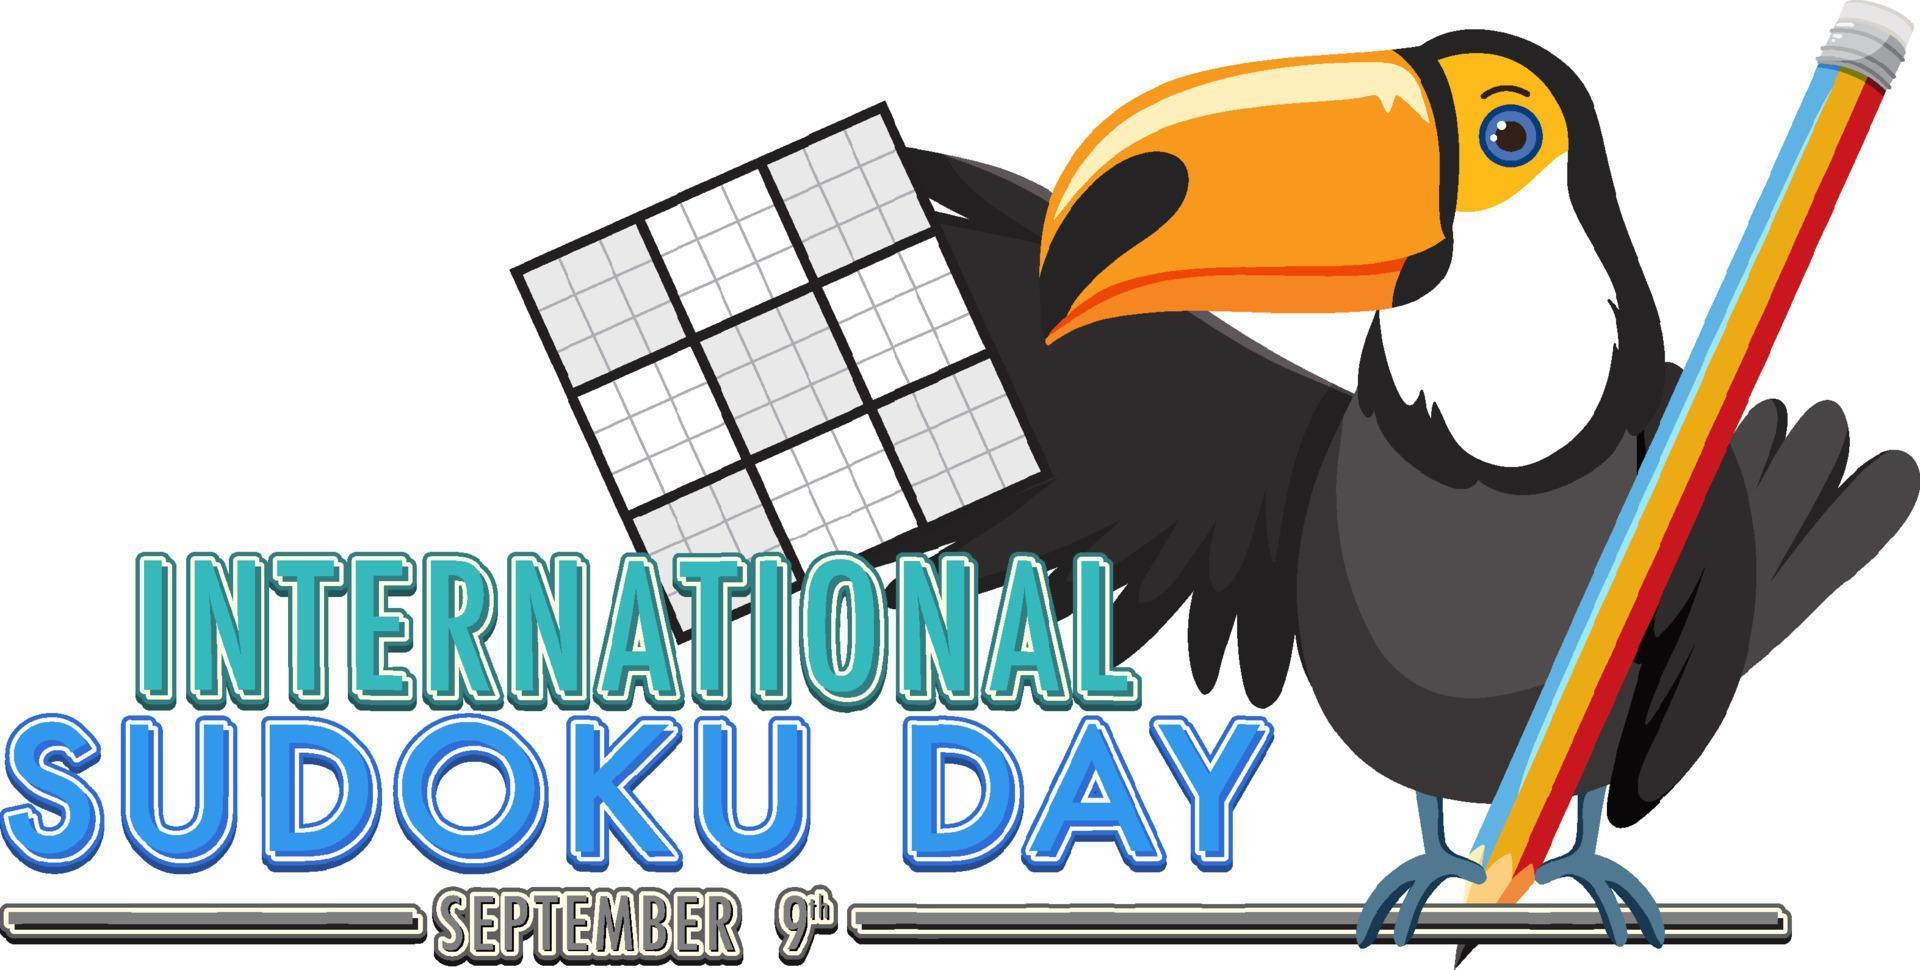 International Sudoku Day Poster Template vector